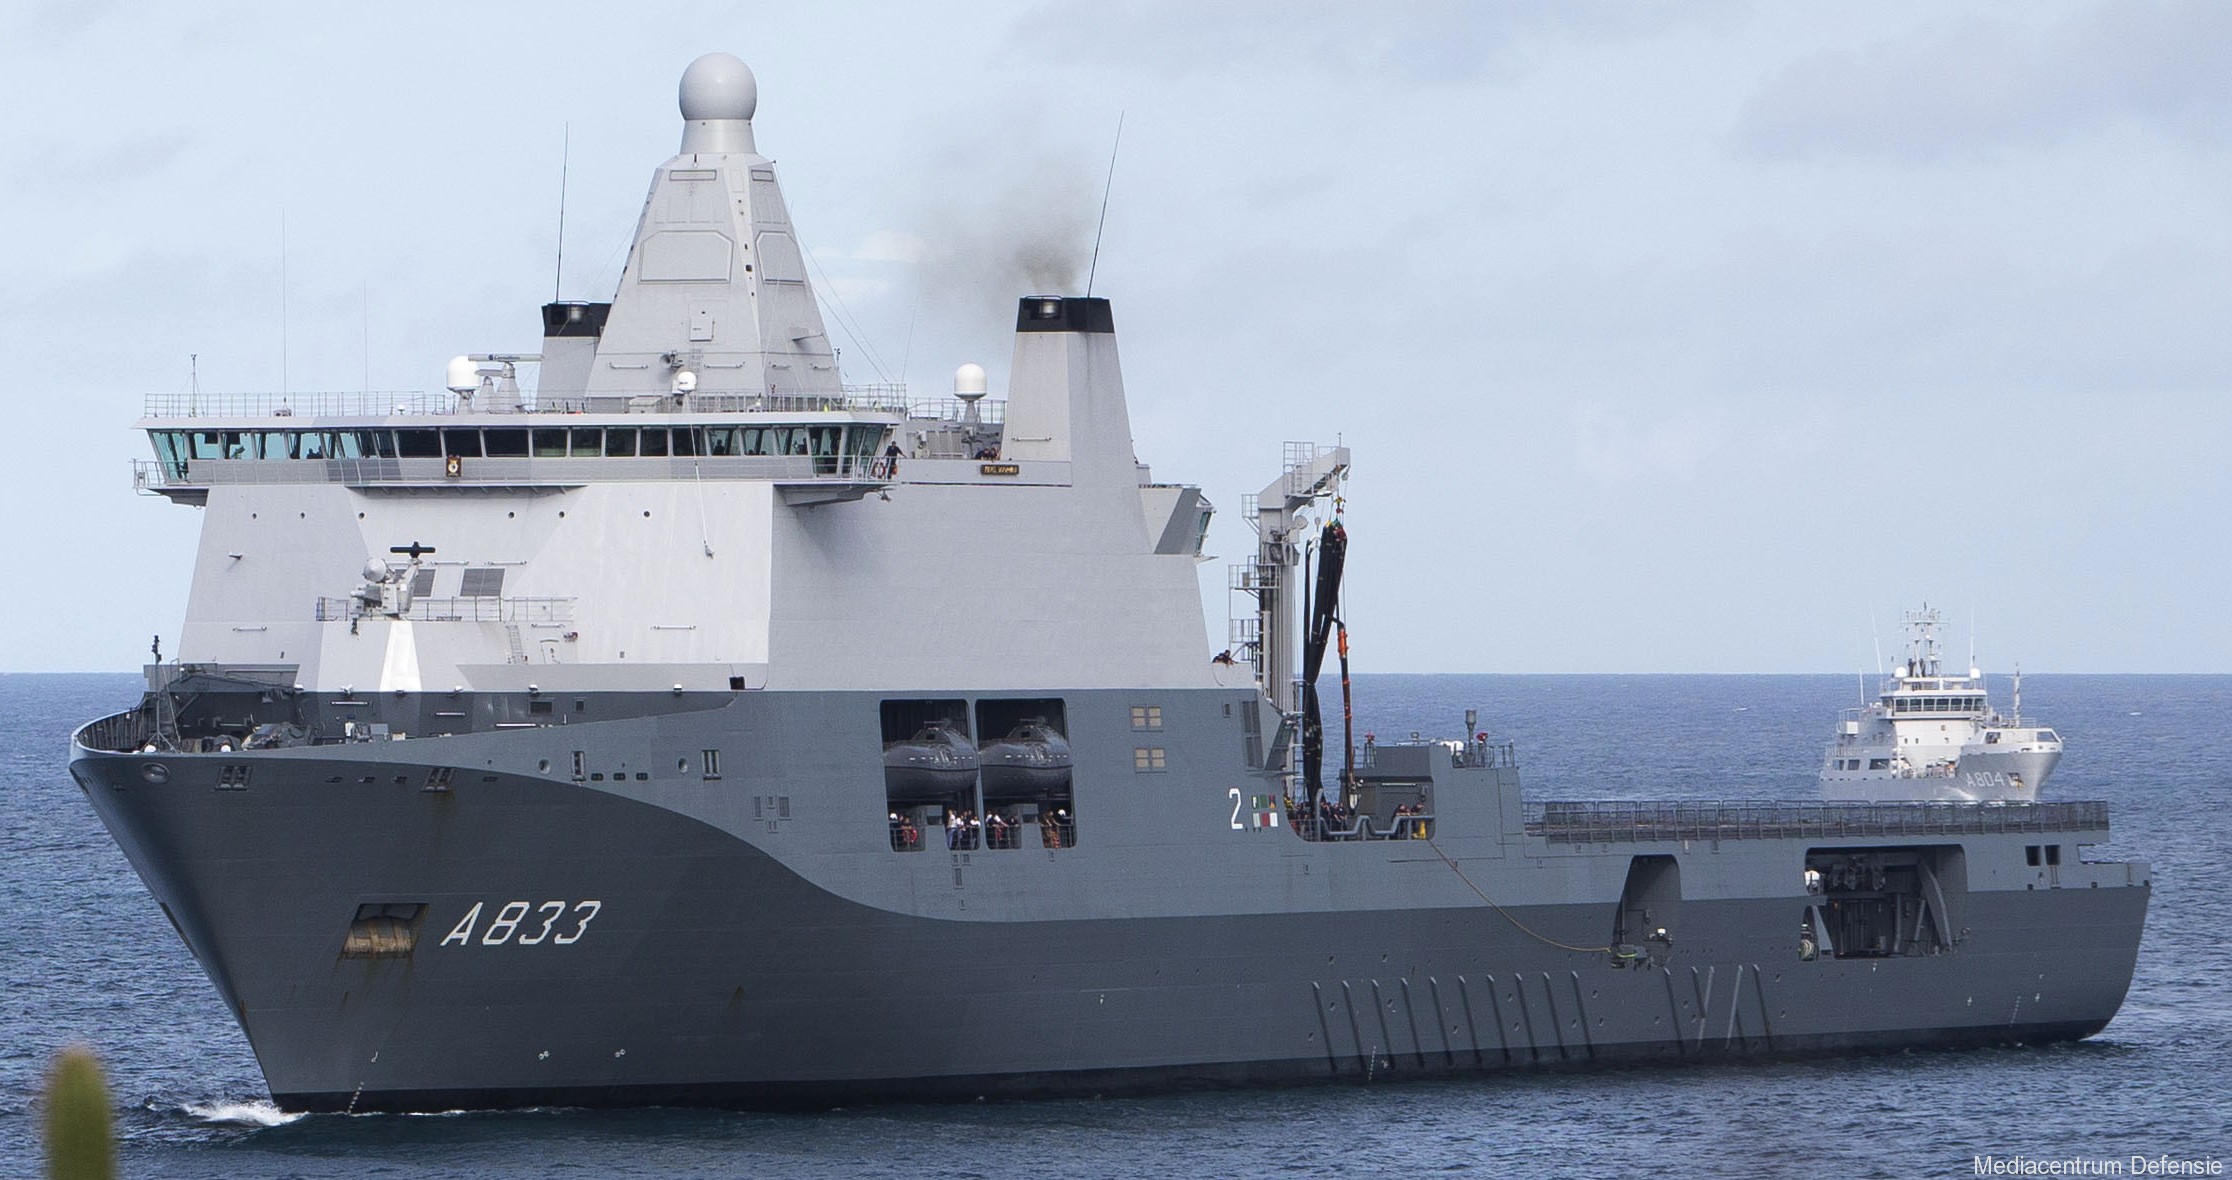 a-833 hnlms karel doorman joint support ship royal netherlands navy koninklijke marine 35